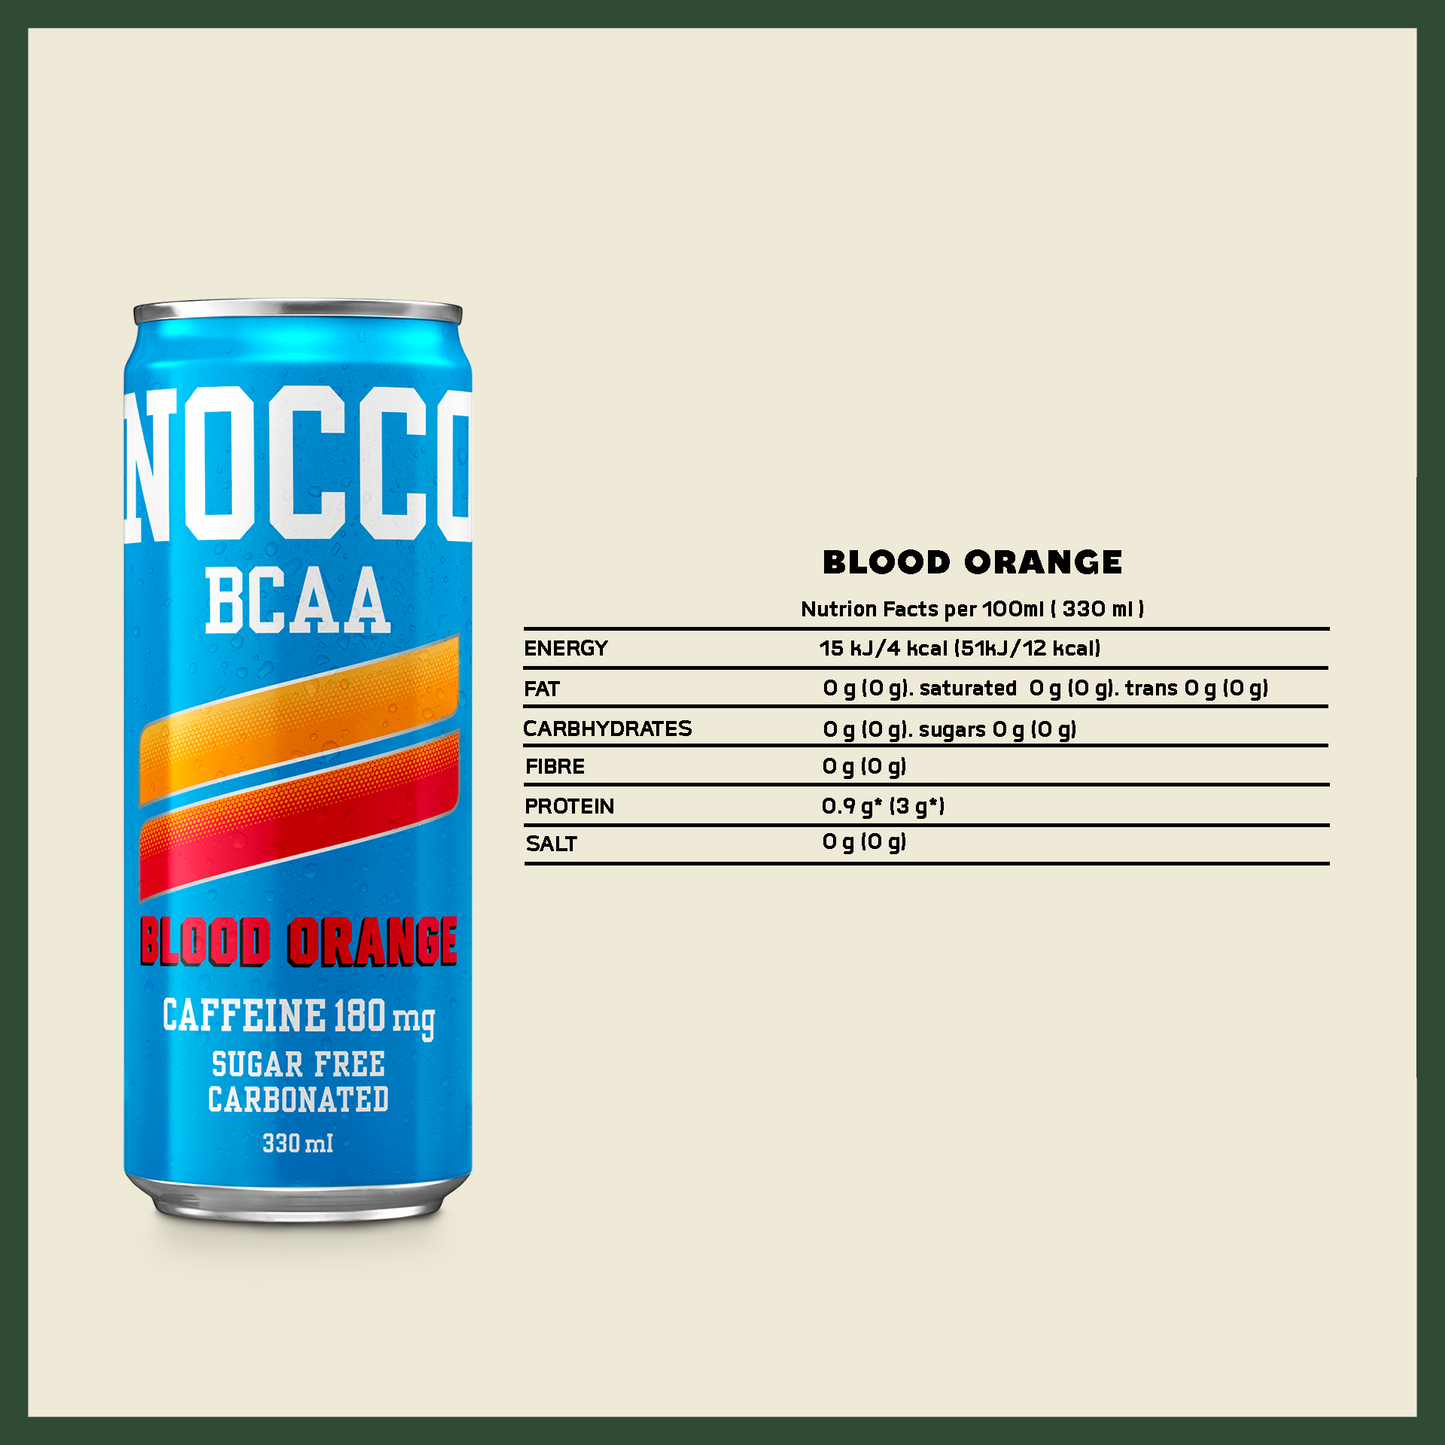 NOCCO BCAA Multi-vitamins Performance Drink - Tasting Kit 5 Cans